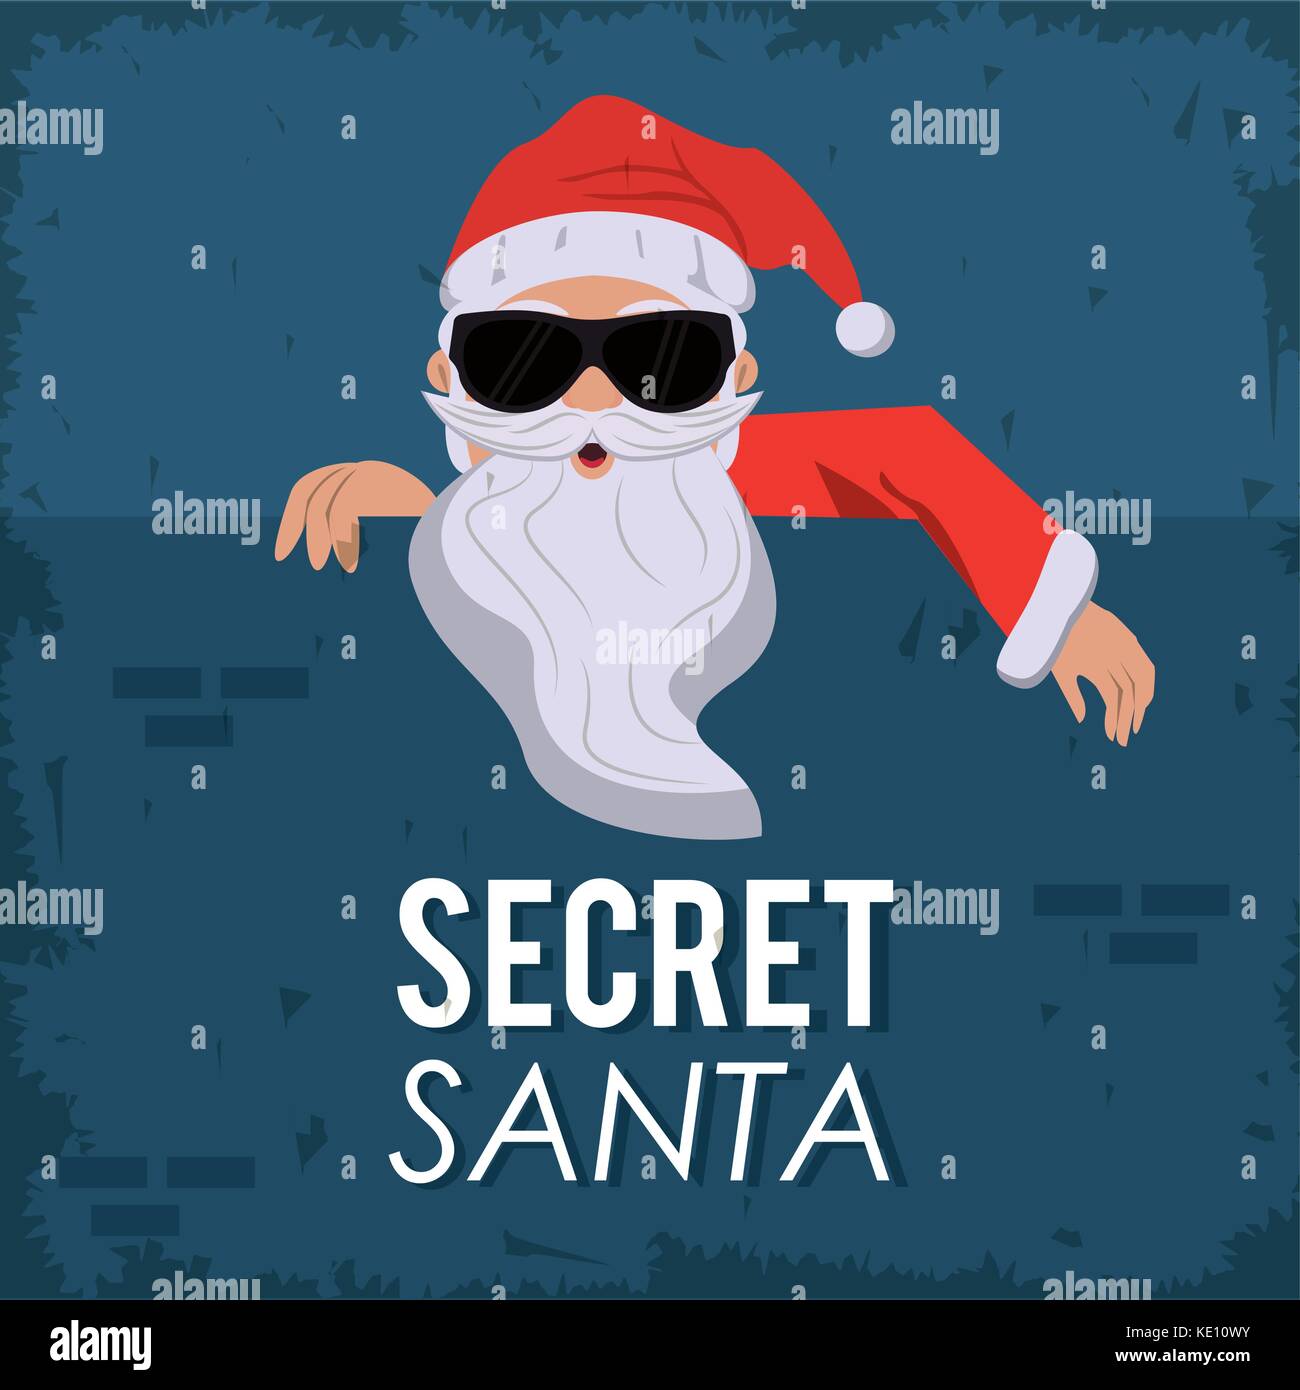 Secret santa cartoon Stock Vector